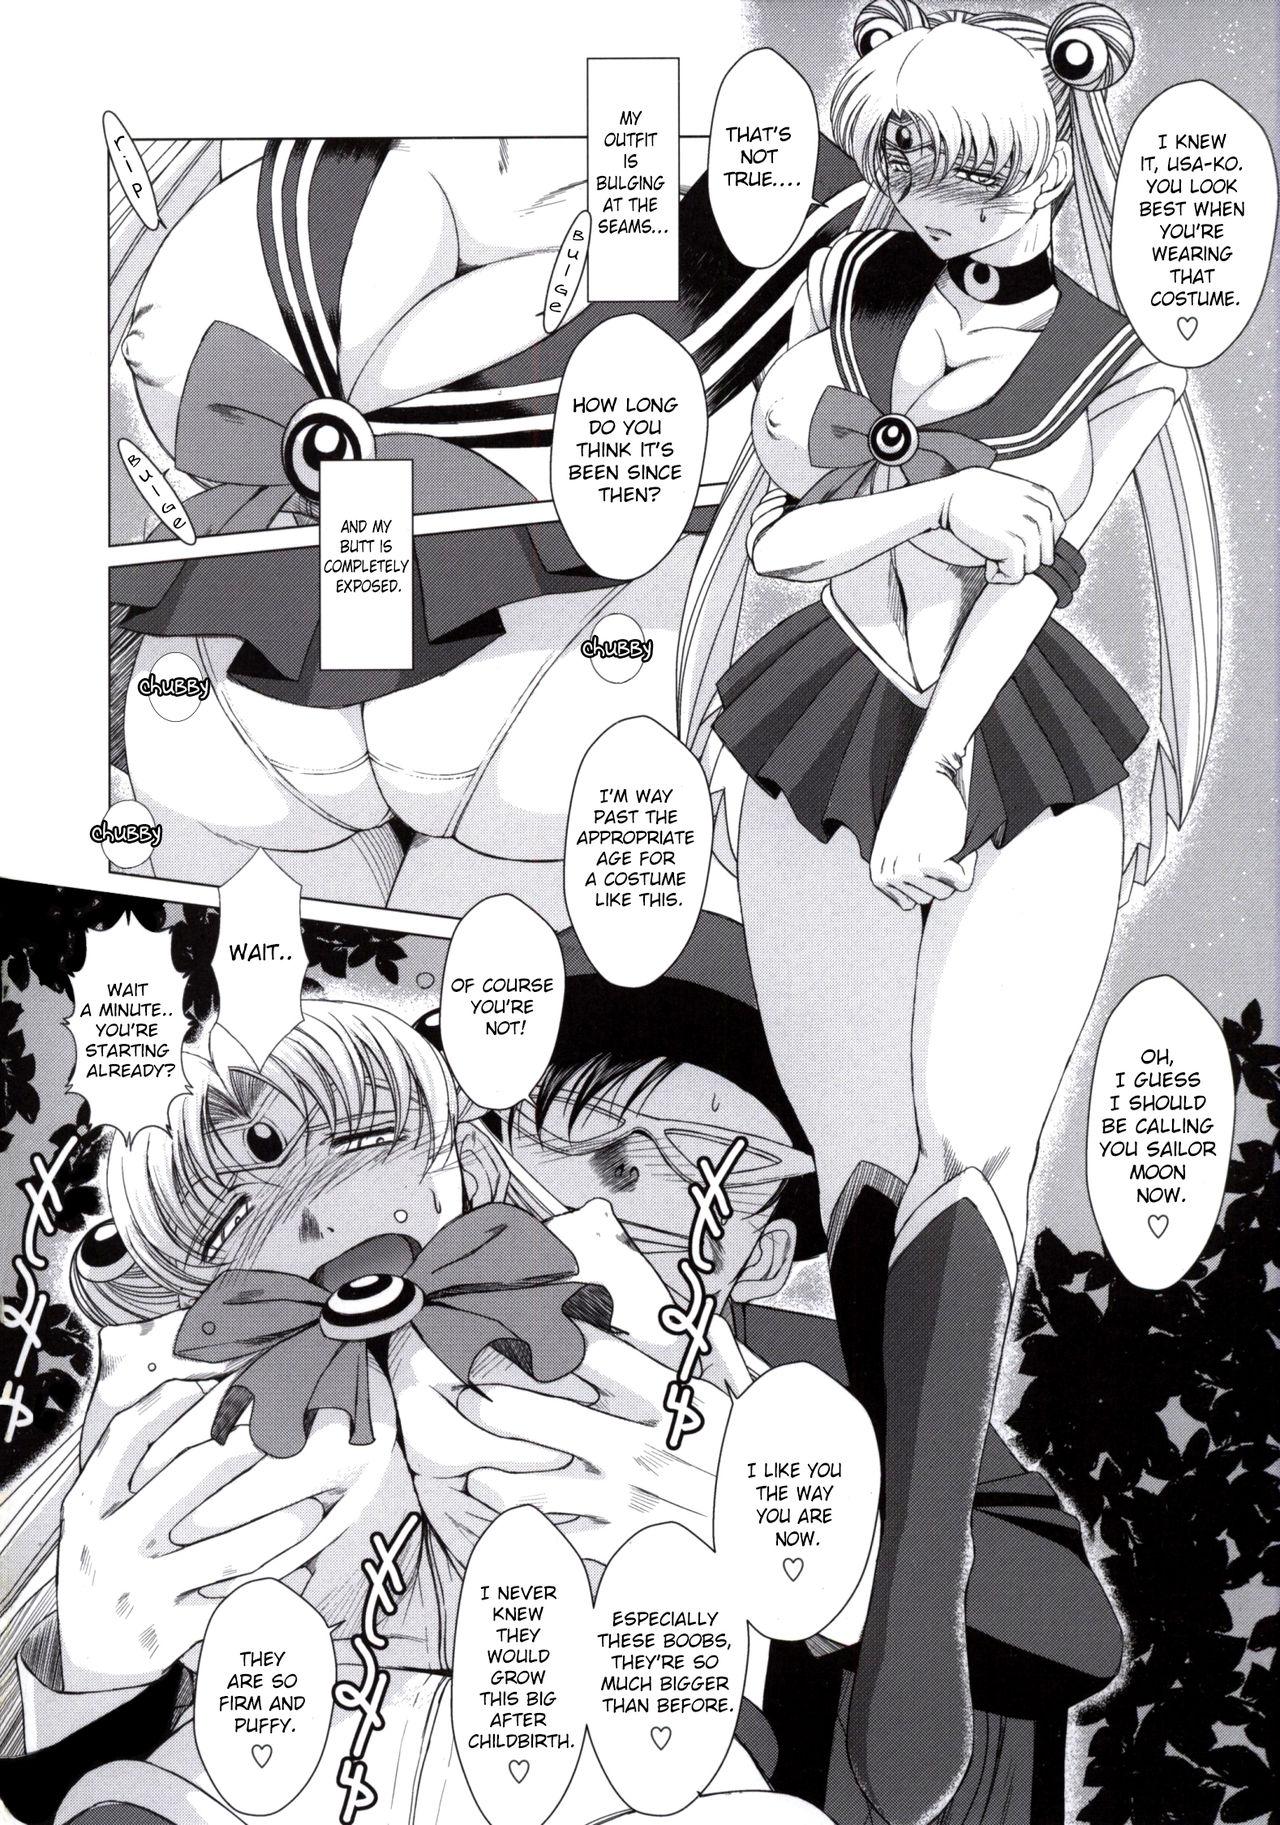 Striptease Submission Sailormoon After/Midgard - Sailor moon Ah my goddess Beard - Page 3